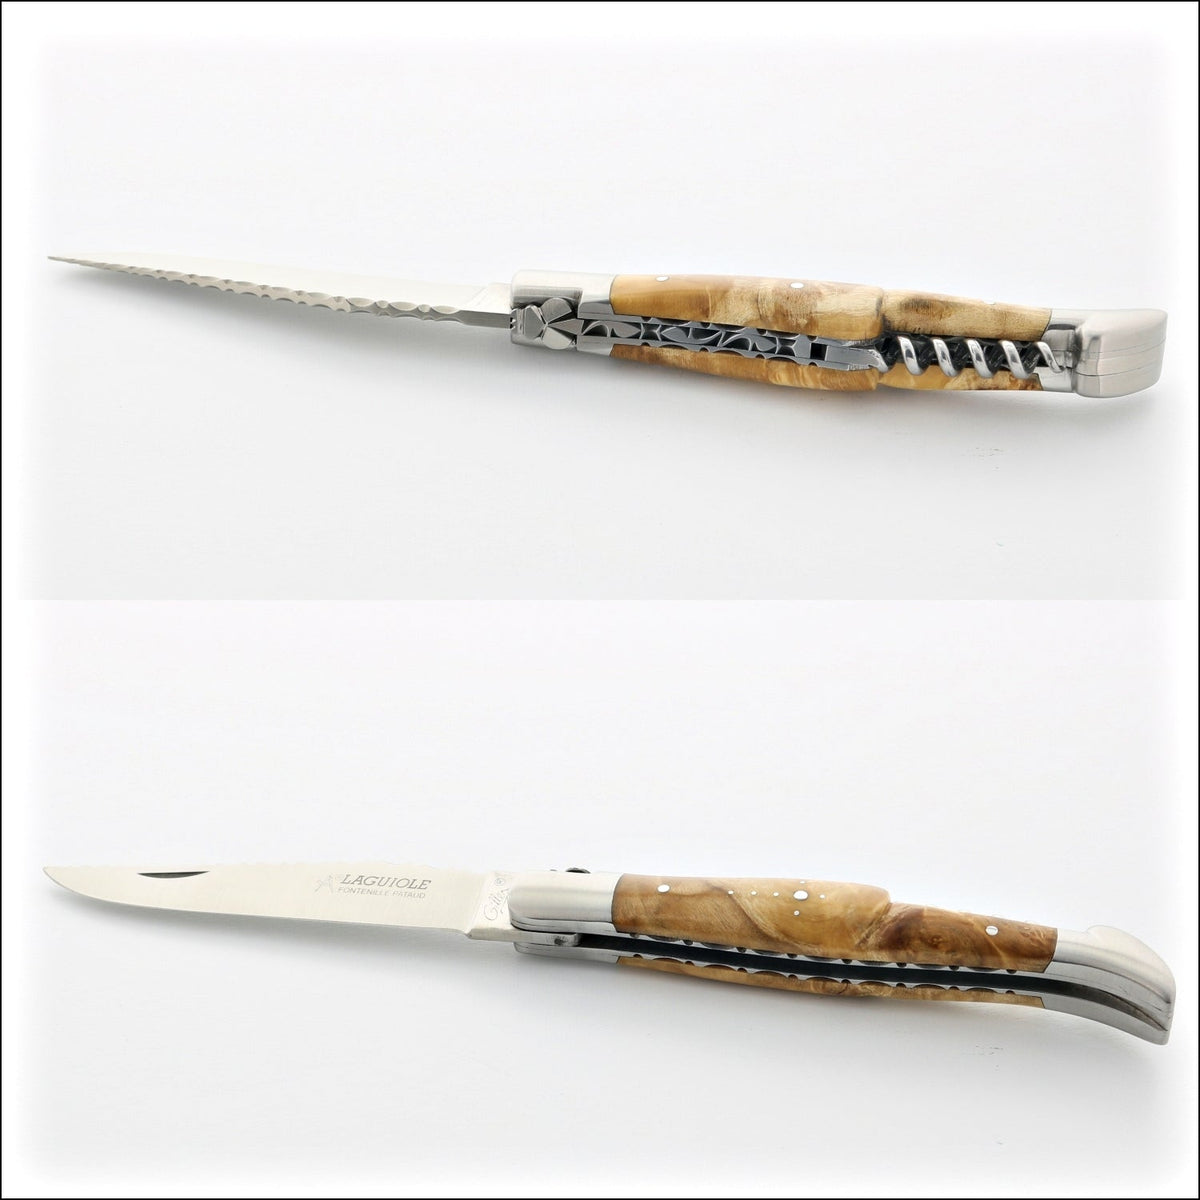 Laguiole Guilloche Corkscrew Knife - Burled Maple Handle